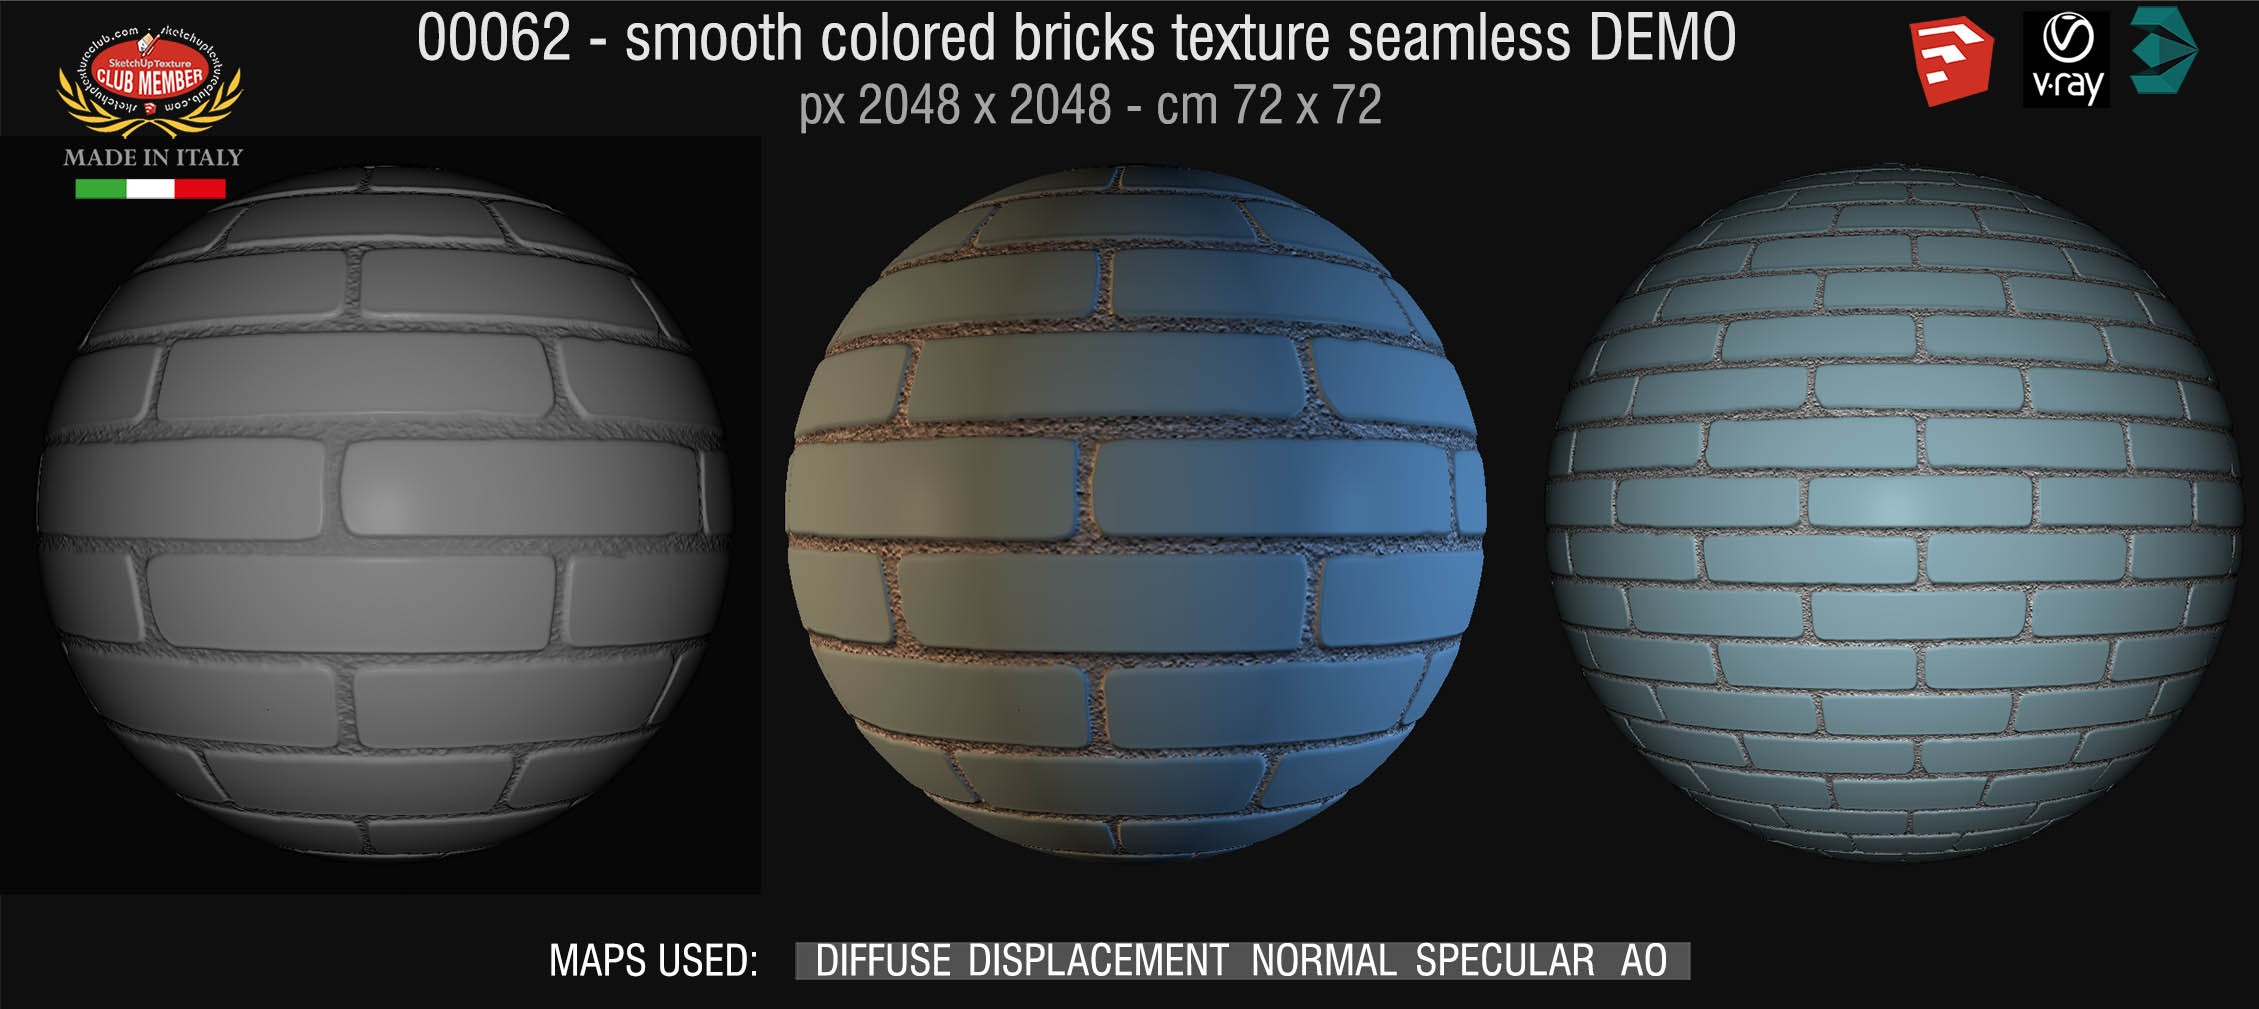 00062 smooth colored bricks texture seamless + maps DEMO